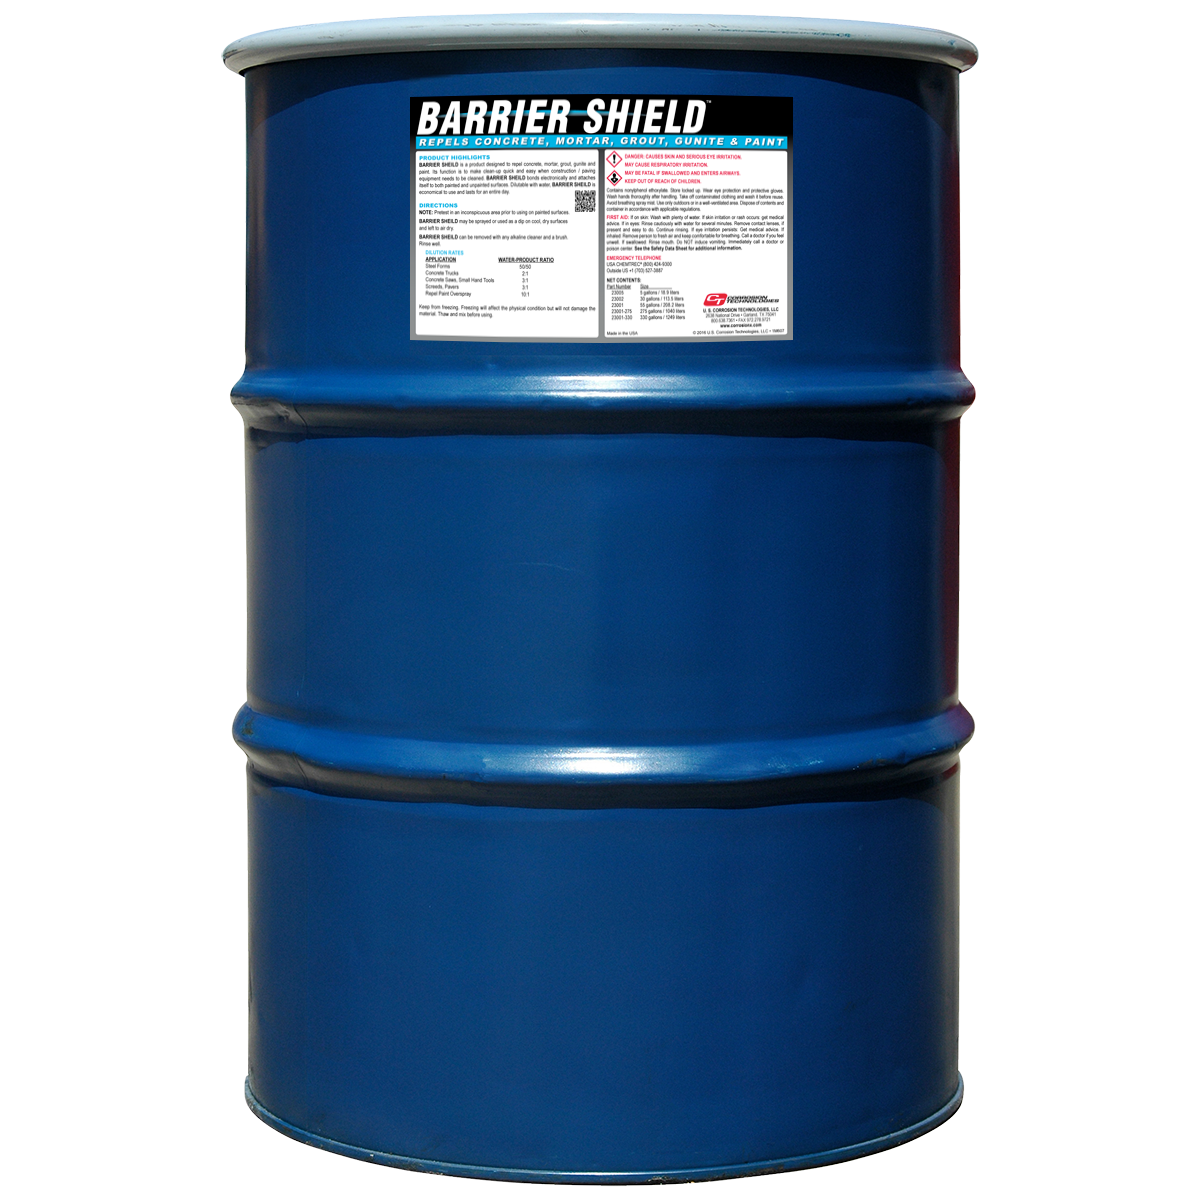 Barrier Shield concrete repellent coating